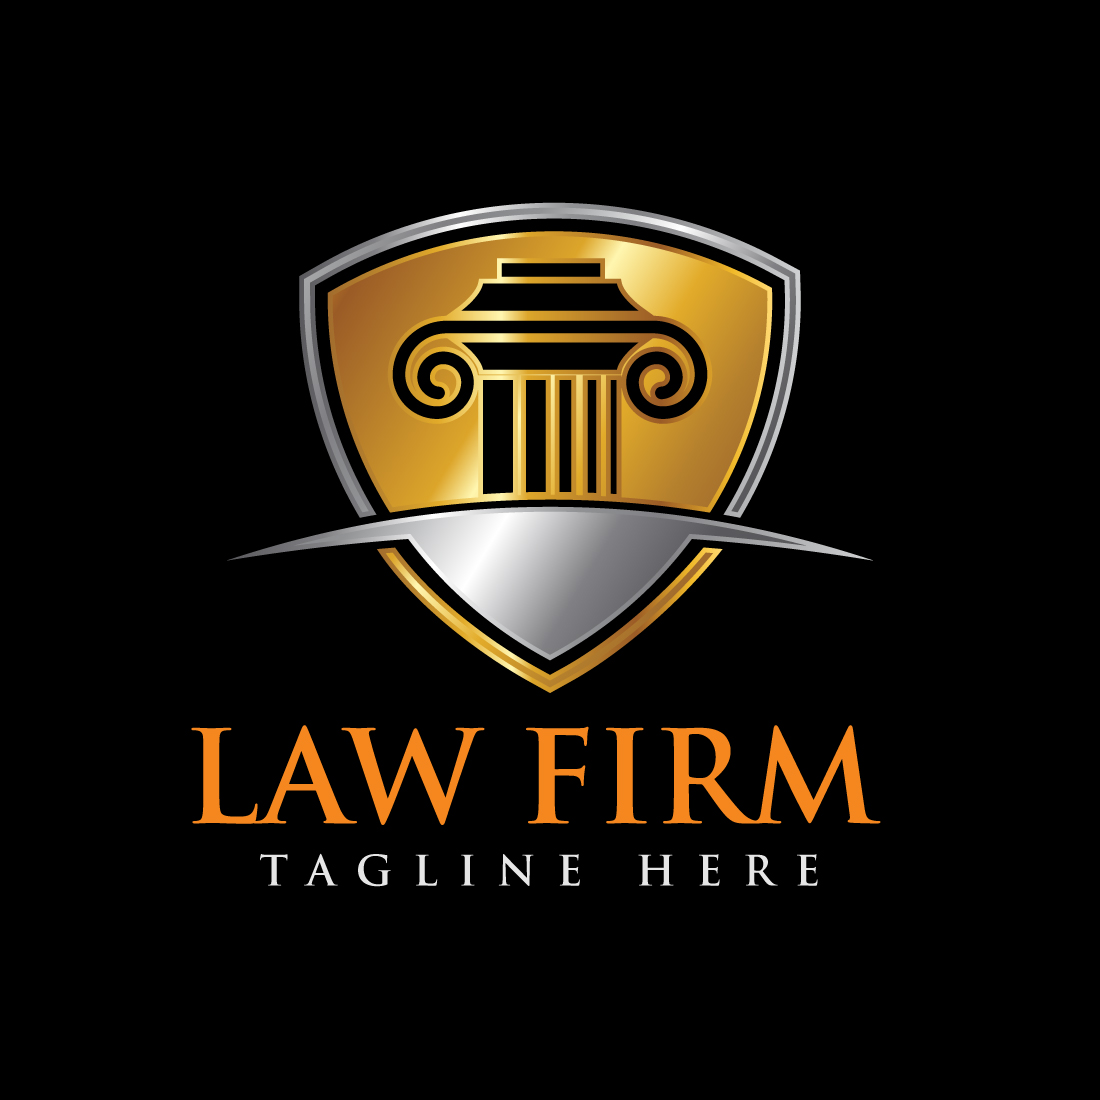 Law Firm Logo Design Illustration Concept cover image.